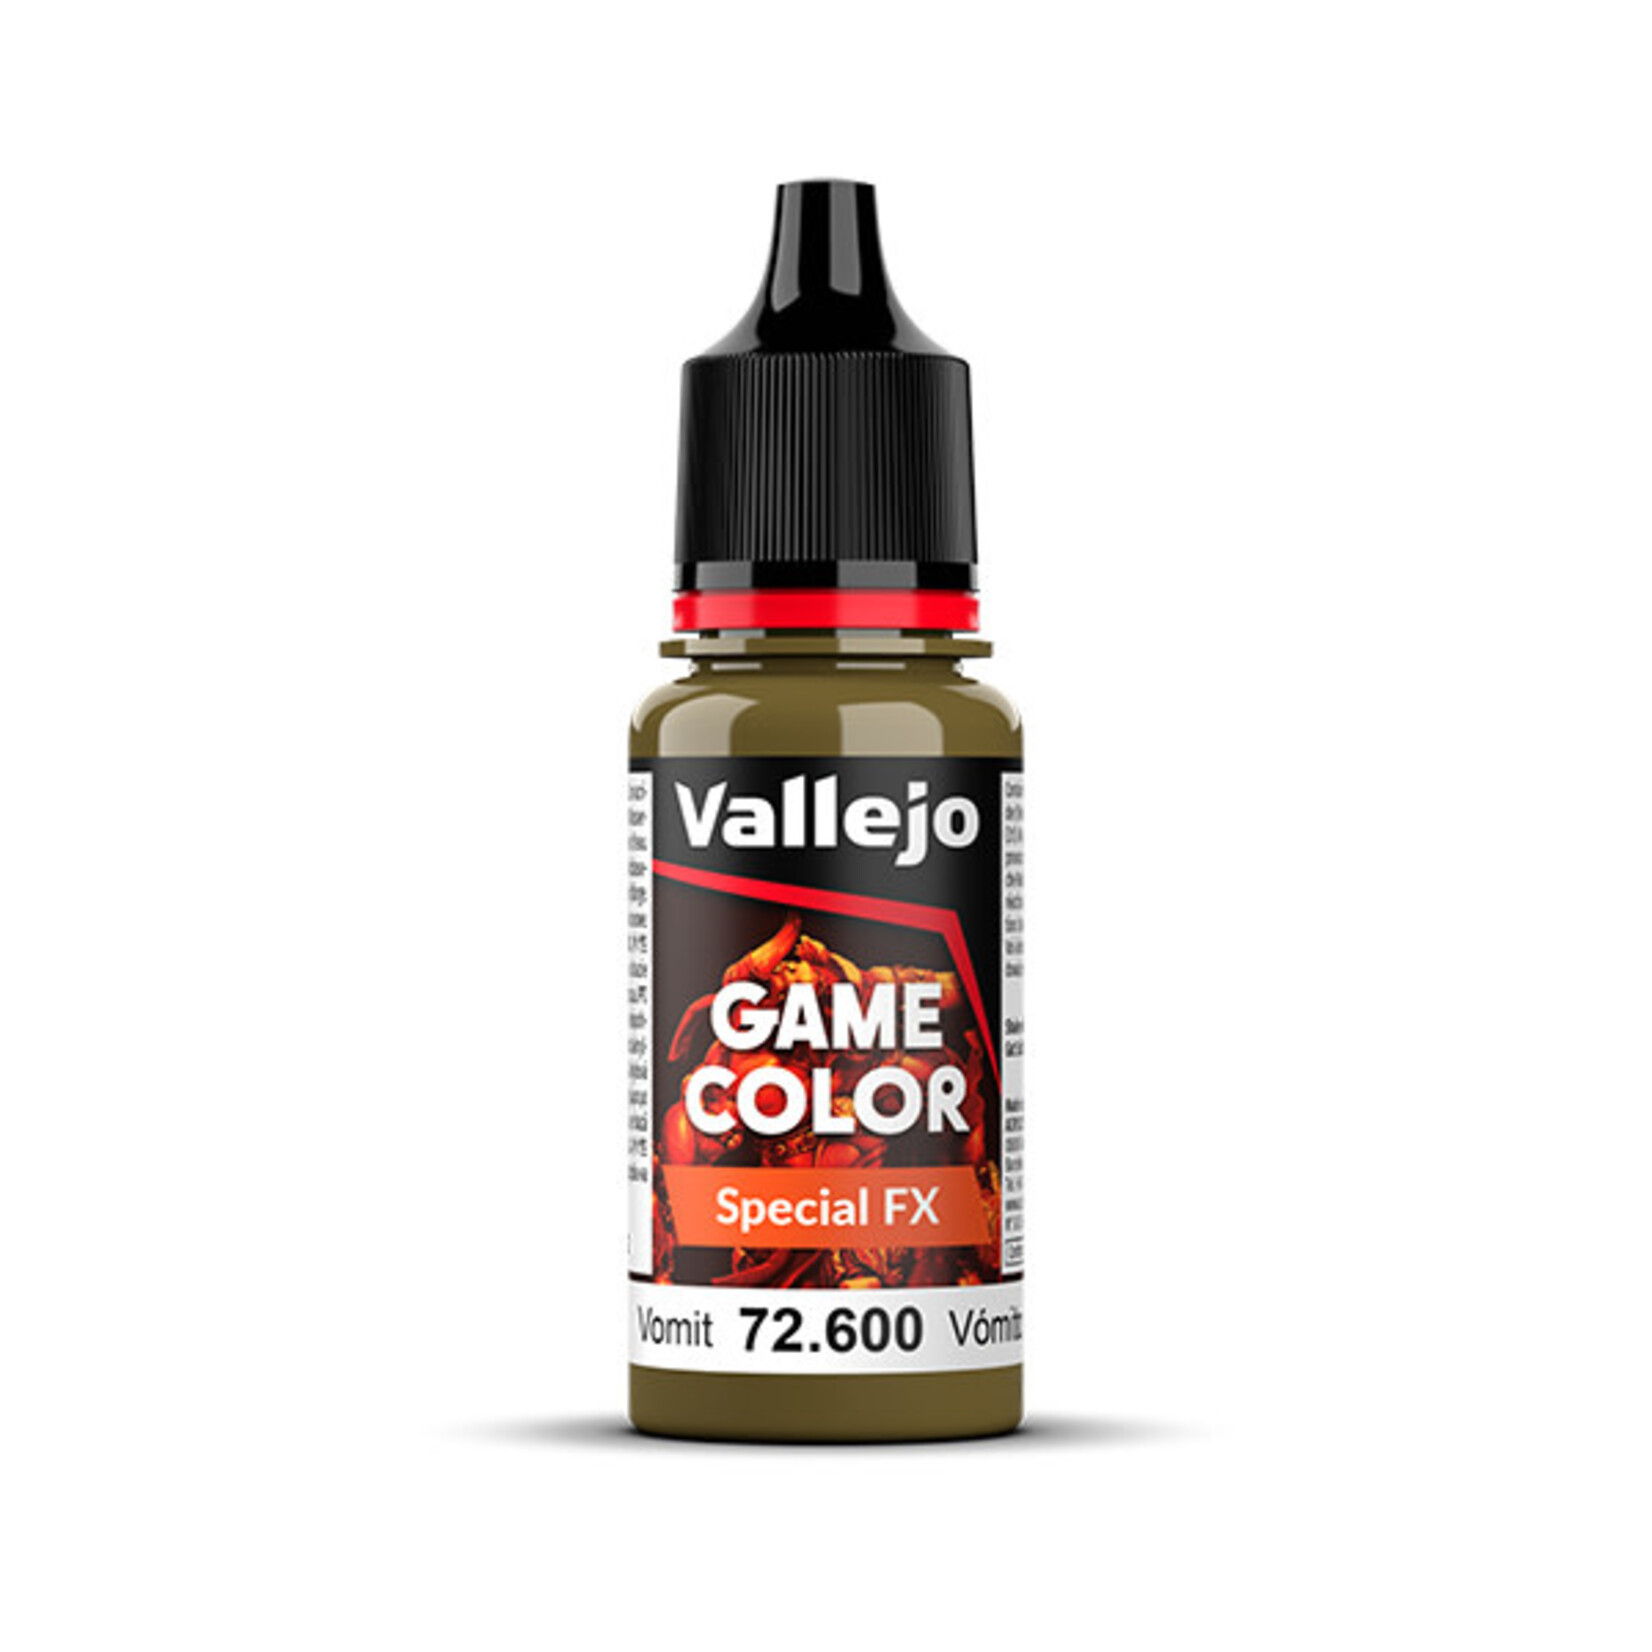 Vallejo Game Color Special FX Vomit